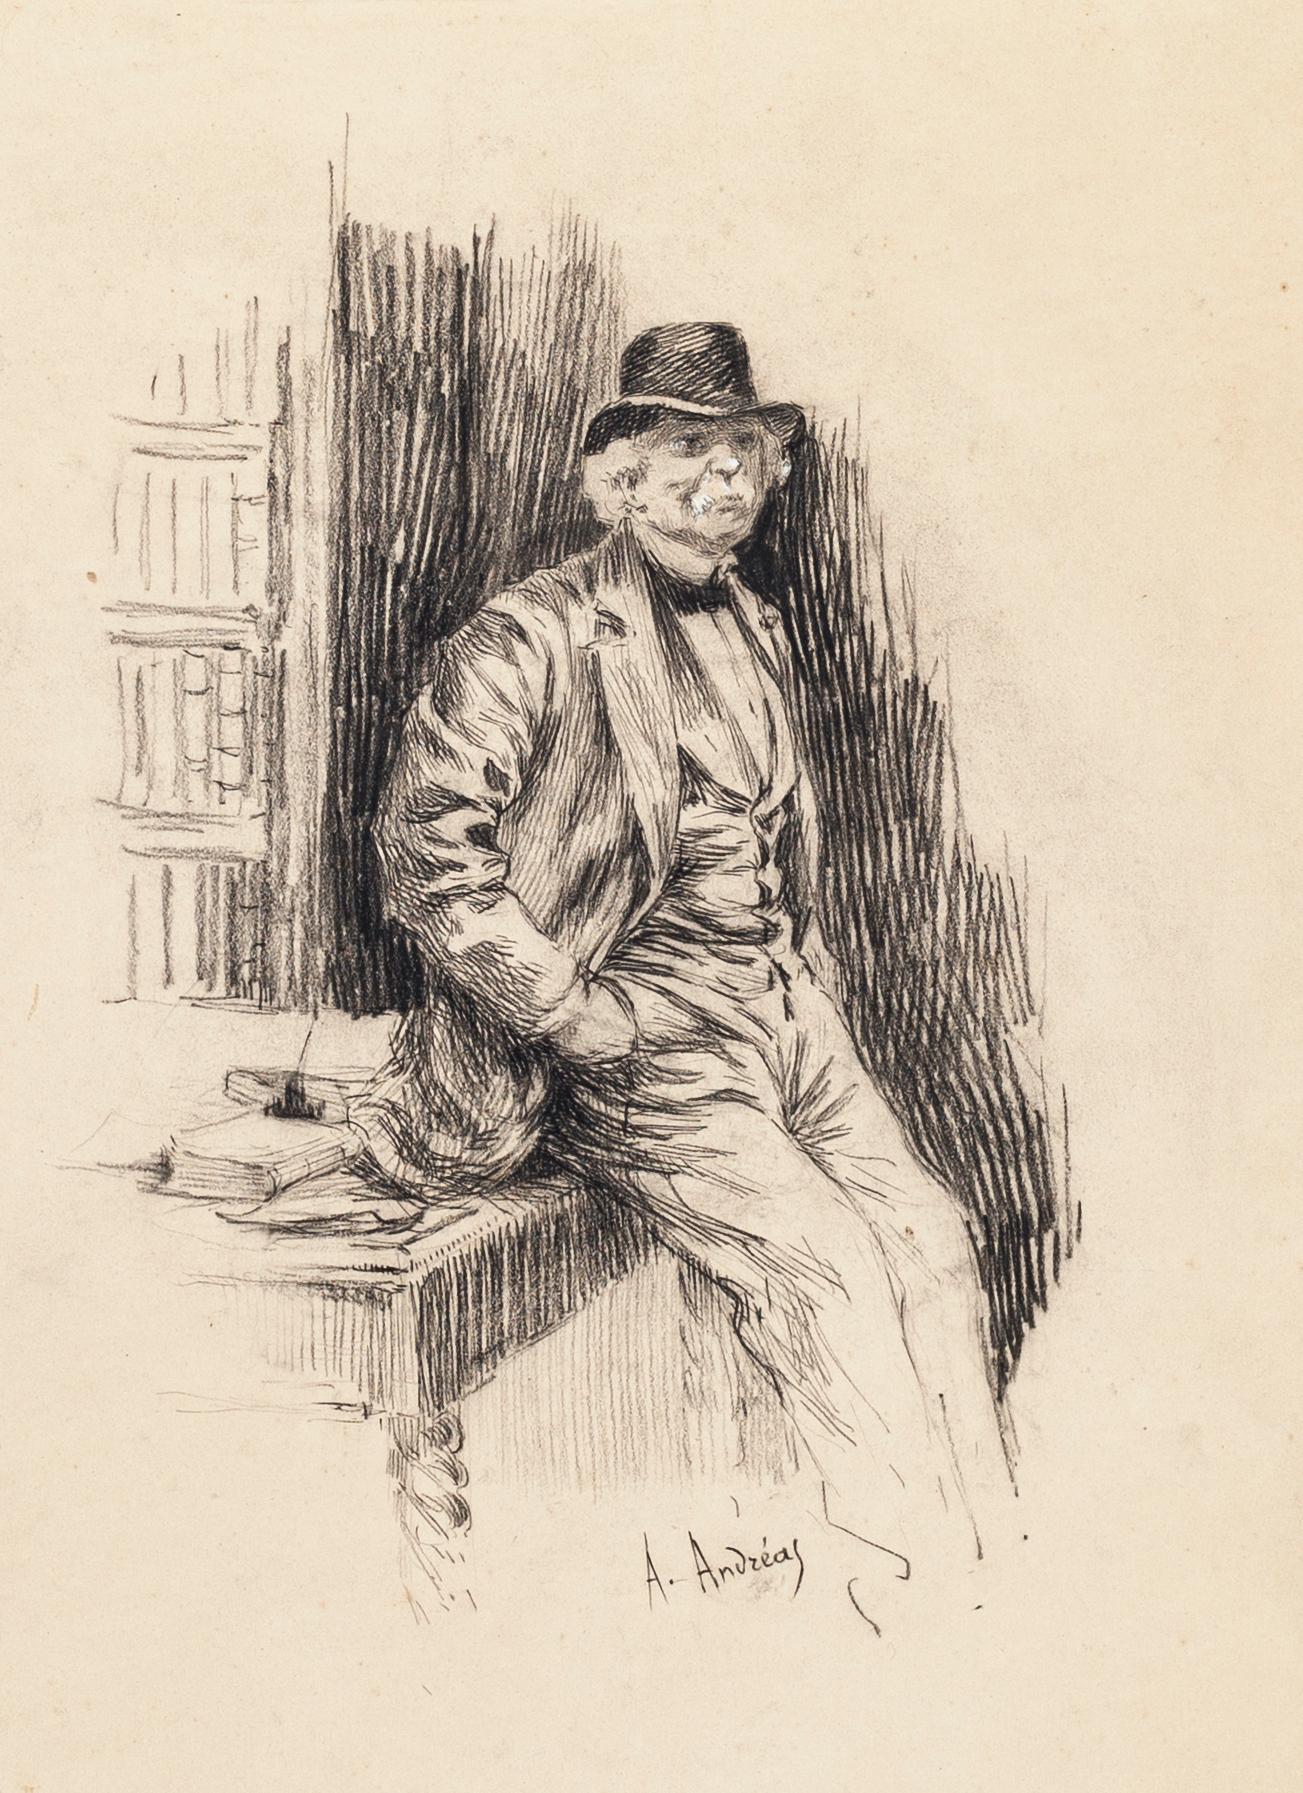 Portrait of Gentleman - Original Lithograph by A. Achenbach - Late 19th Century